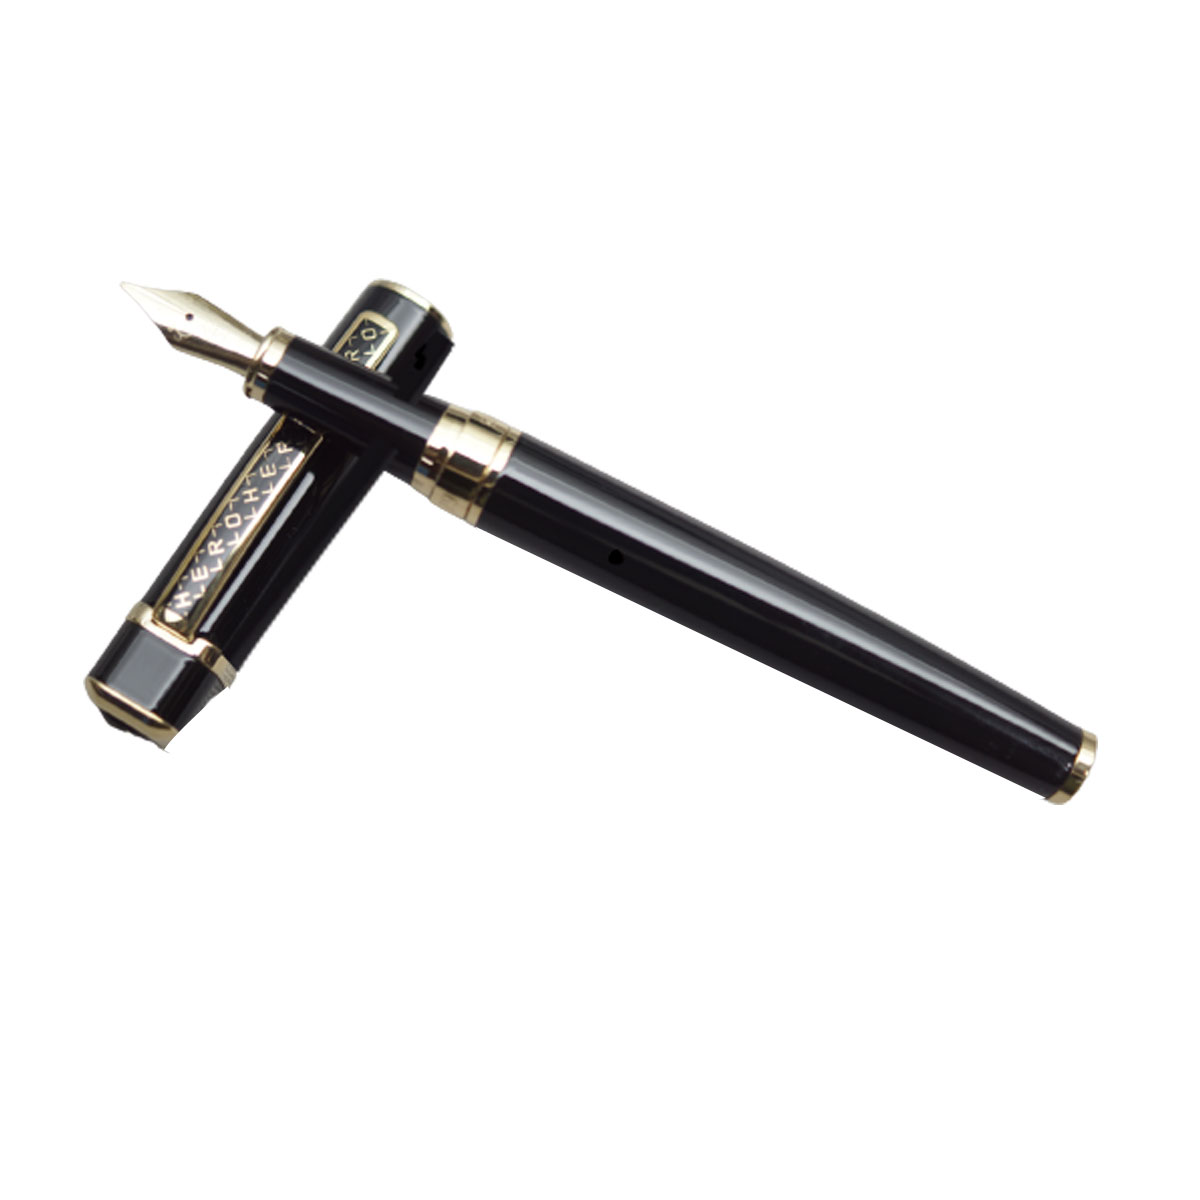 Hero 979 Black Body and Cap Fine Gold Nib with Gold Trims Converter Type Fountain Pen SKU 20236